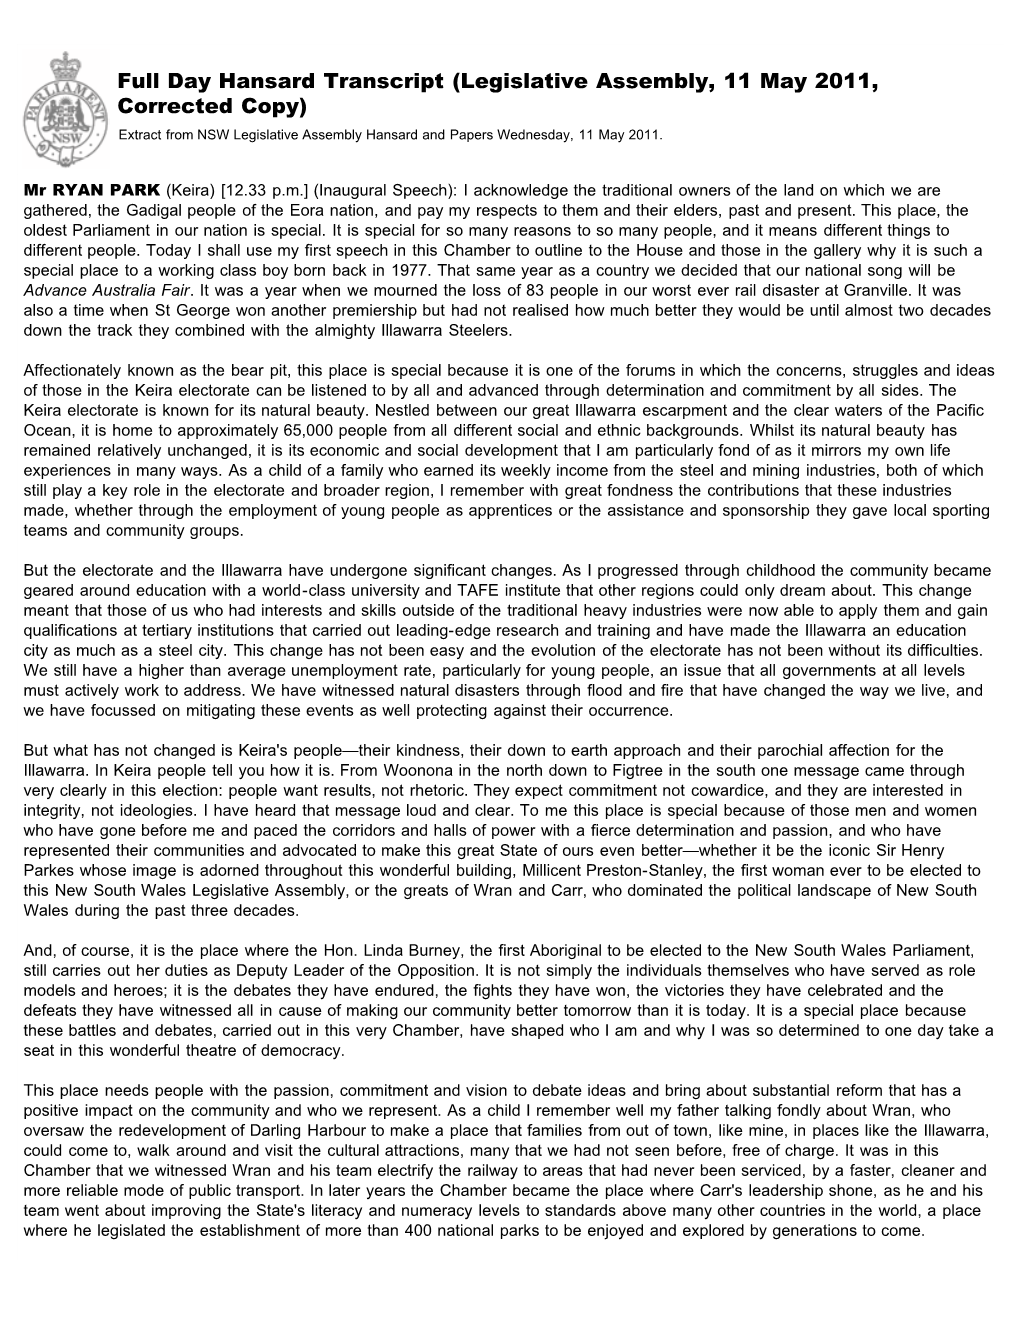 Full Day Hansard Transcript (Legislative Assembly, 11 May 2011, Corrected Copy) Extract from NSW Legislative Assembly Hansard and Papers Wednesday, 11 May 2011